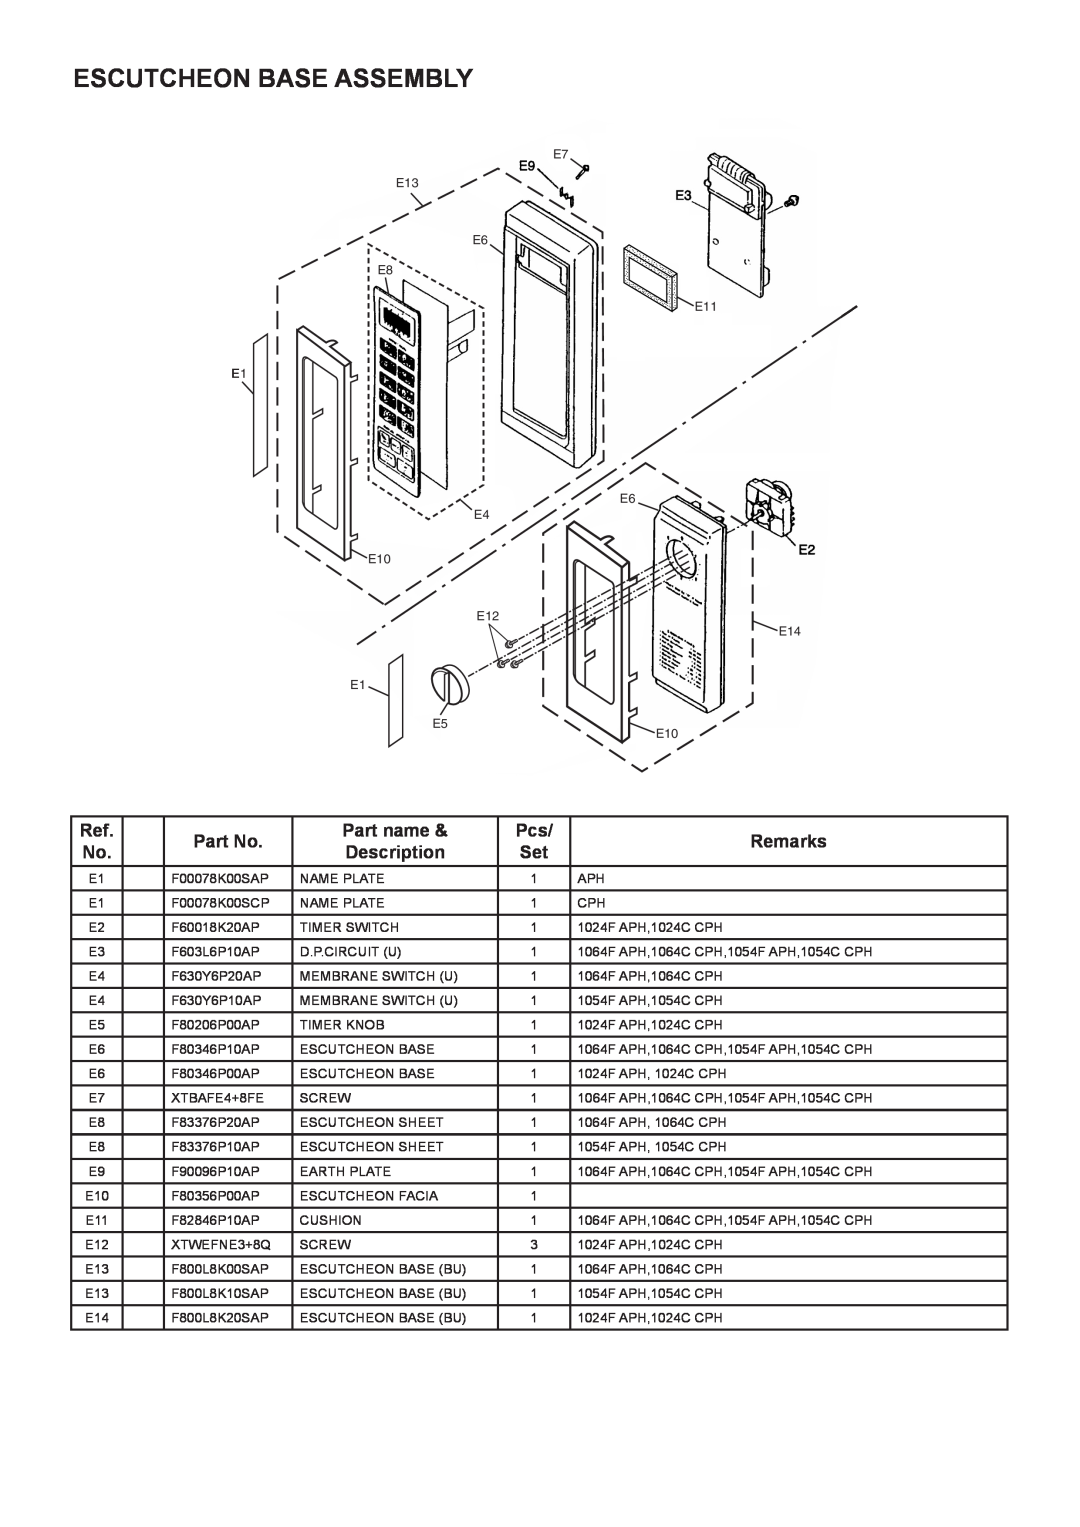 Panasonic NE-1064C Escutcheon Base Assembly, Part name, Remarks, Description, E7 E13 E6 E8 E11 E1 E6 E4, E10 E12 E1 E5 